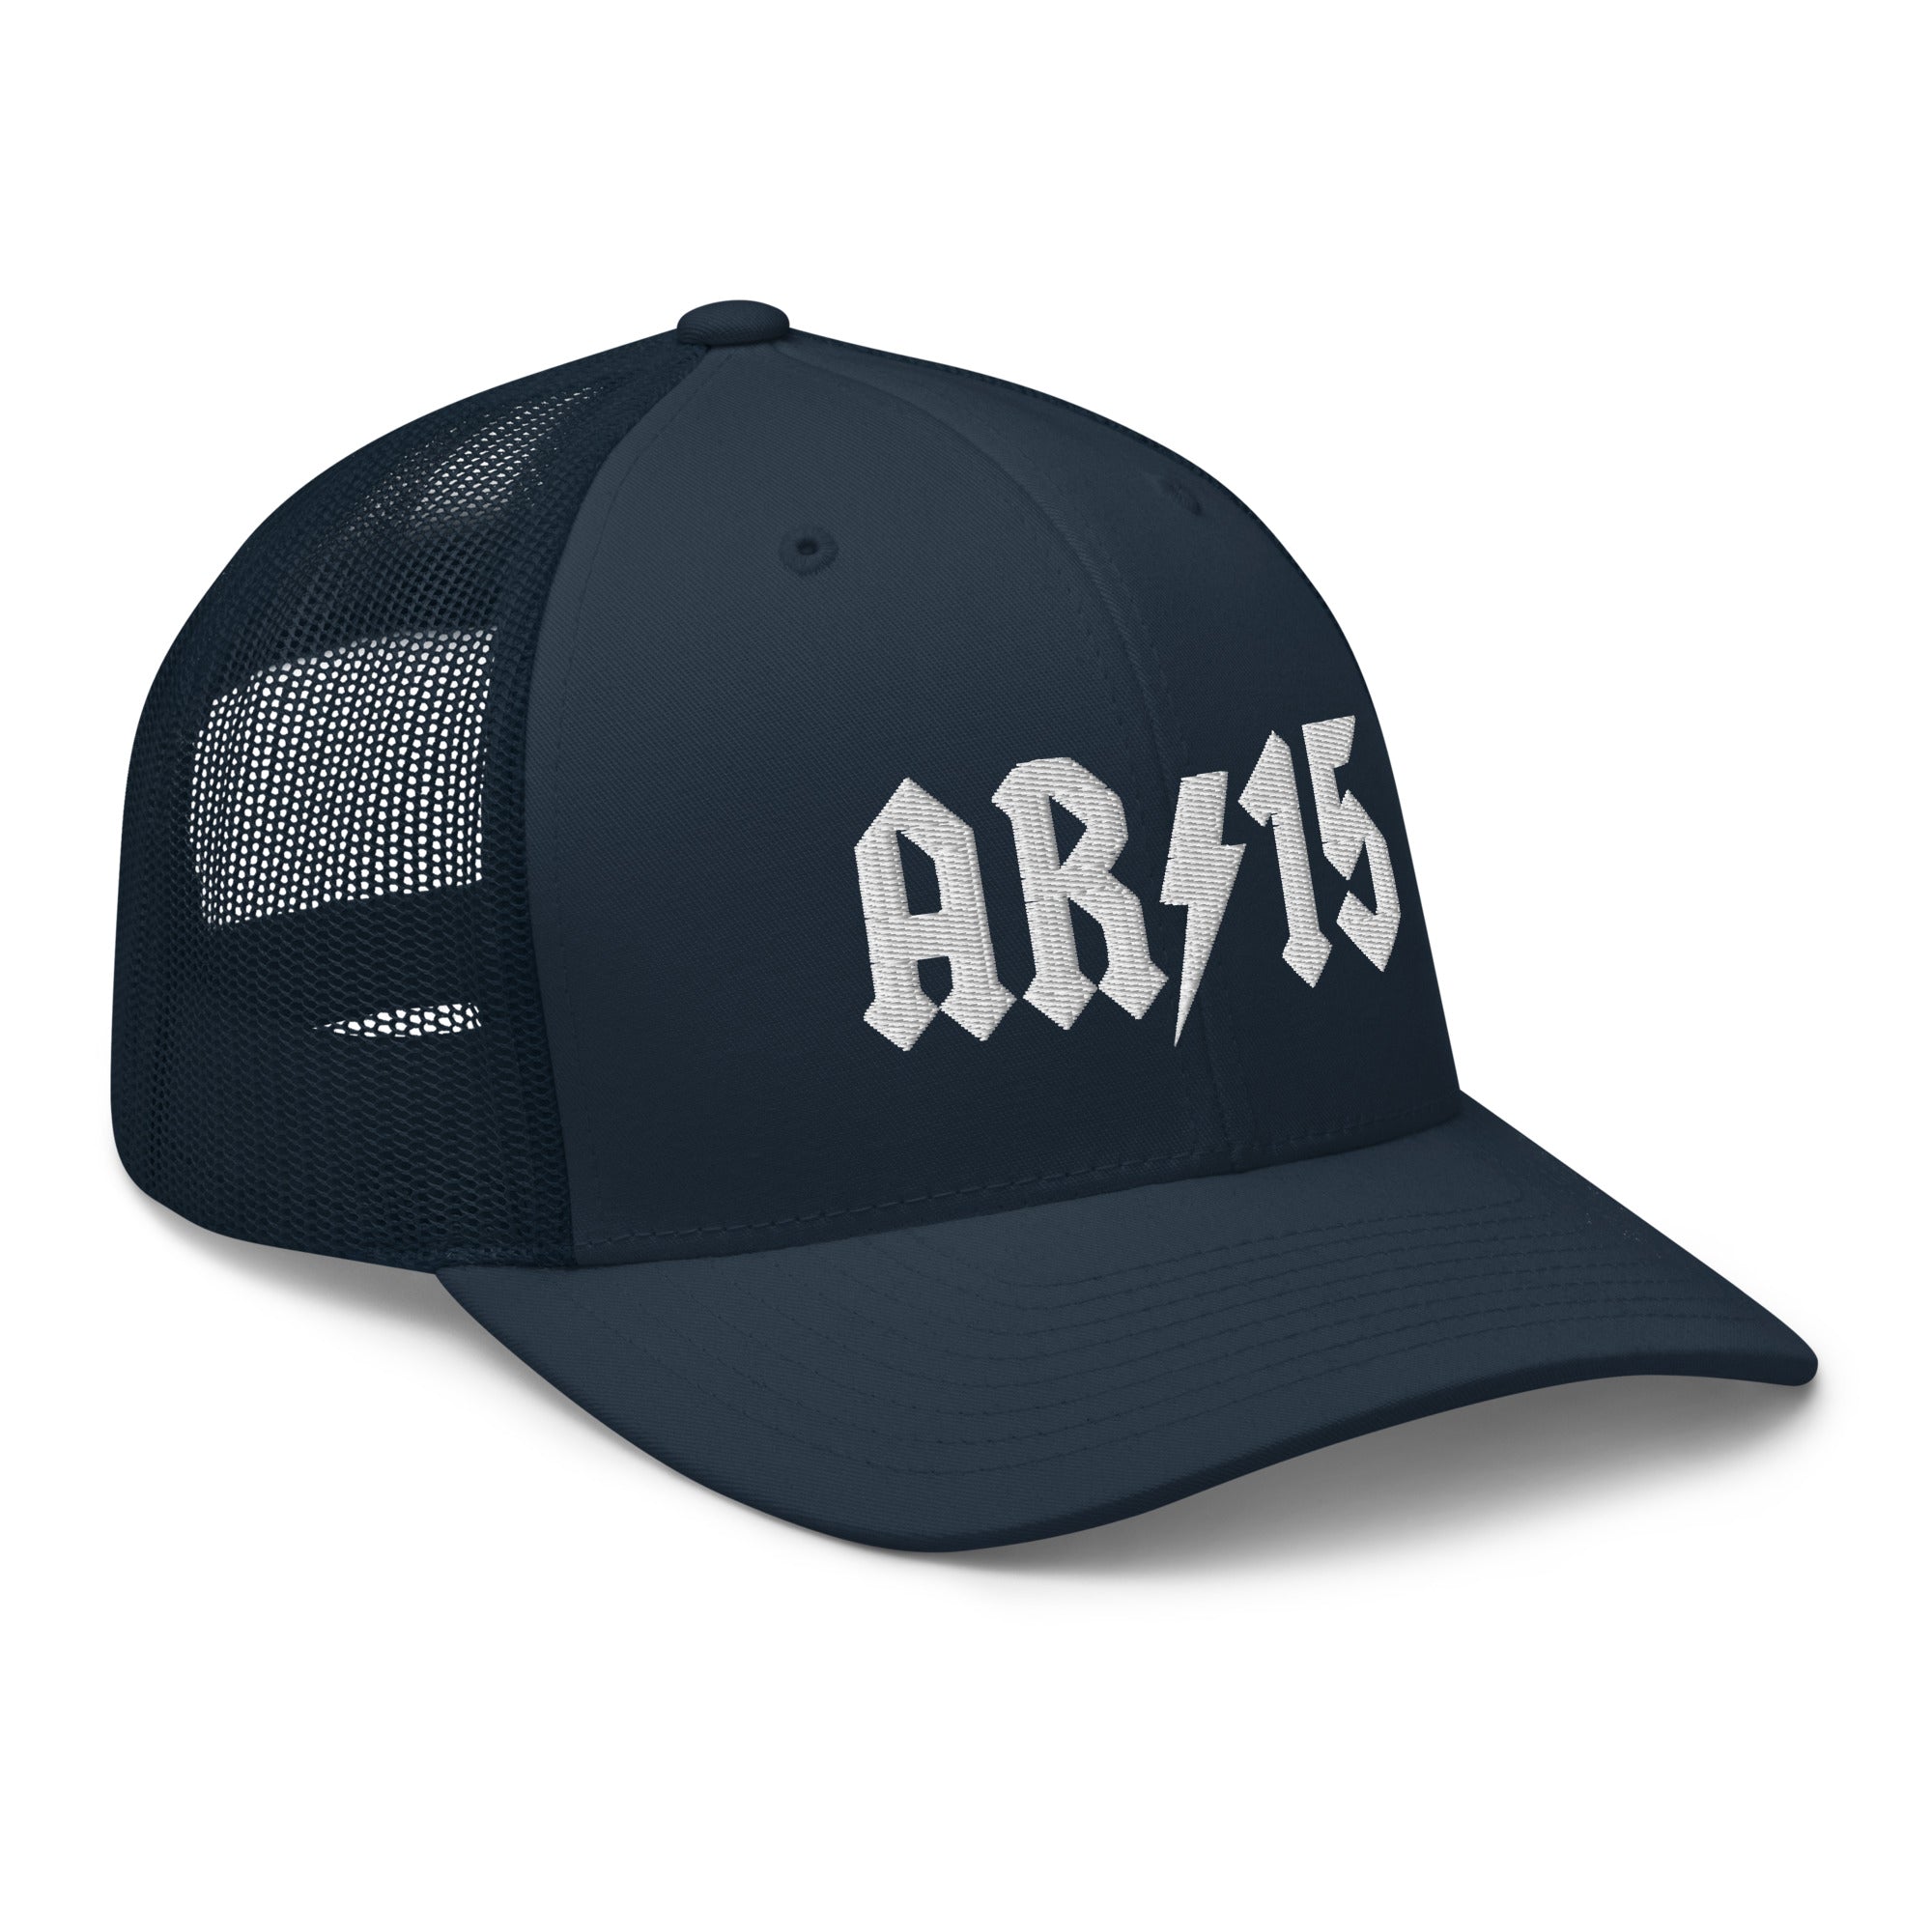 AR/15 Trucker Cap - | Drunk America 